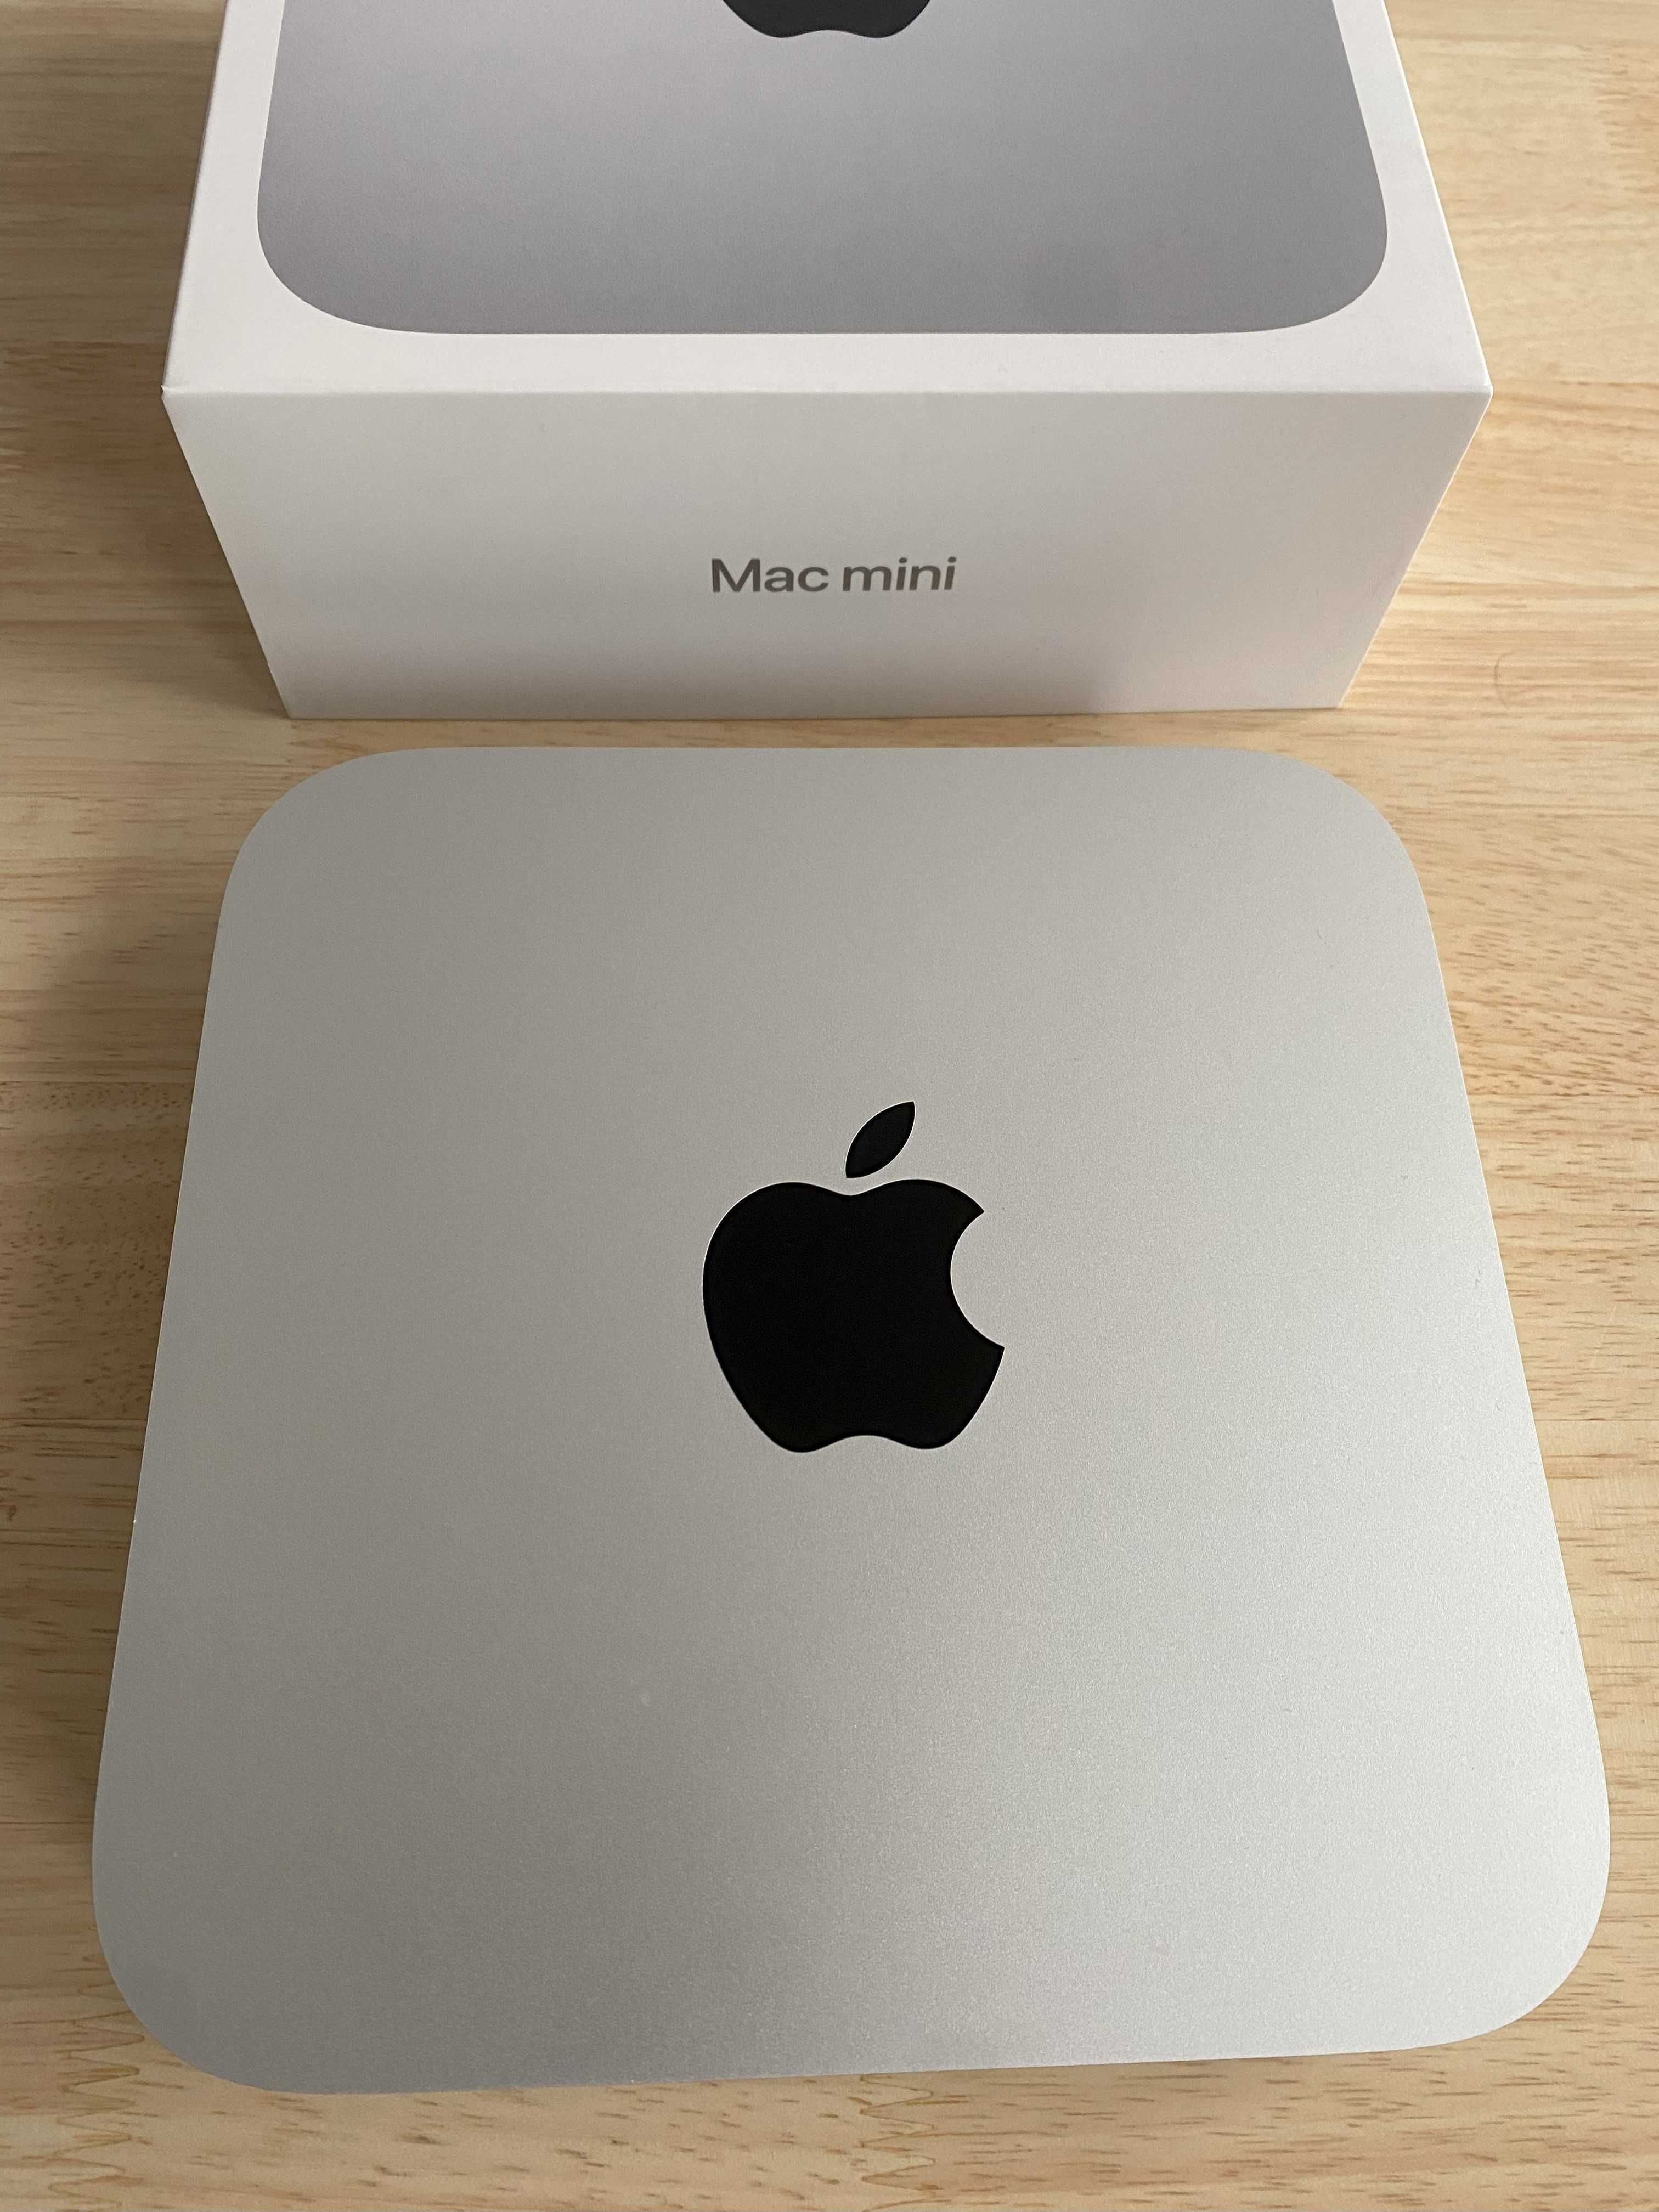 Komputer Apple Mac mini m1 8GB ram, ssd 256GB, bardzo dobry sprawny